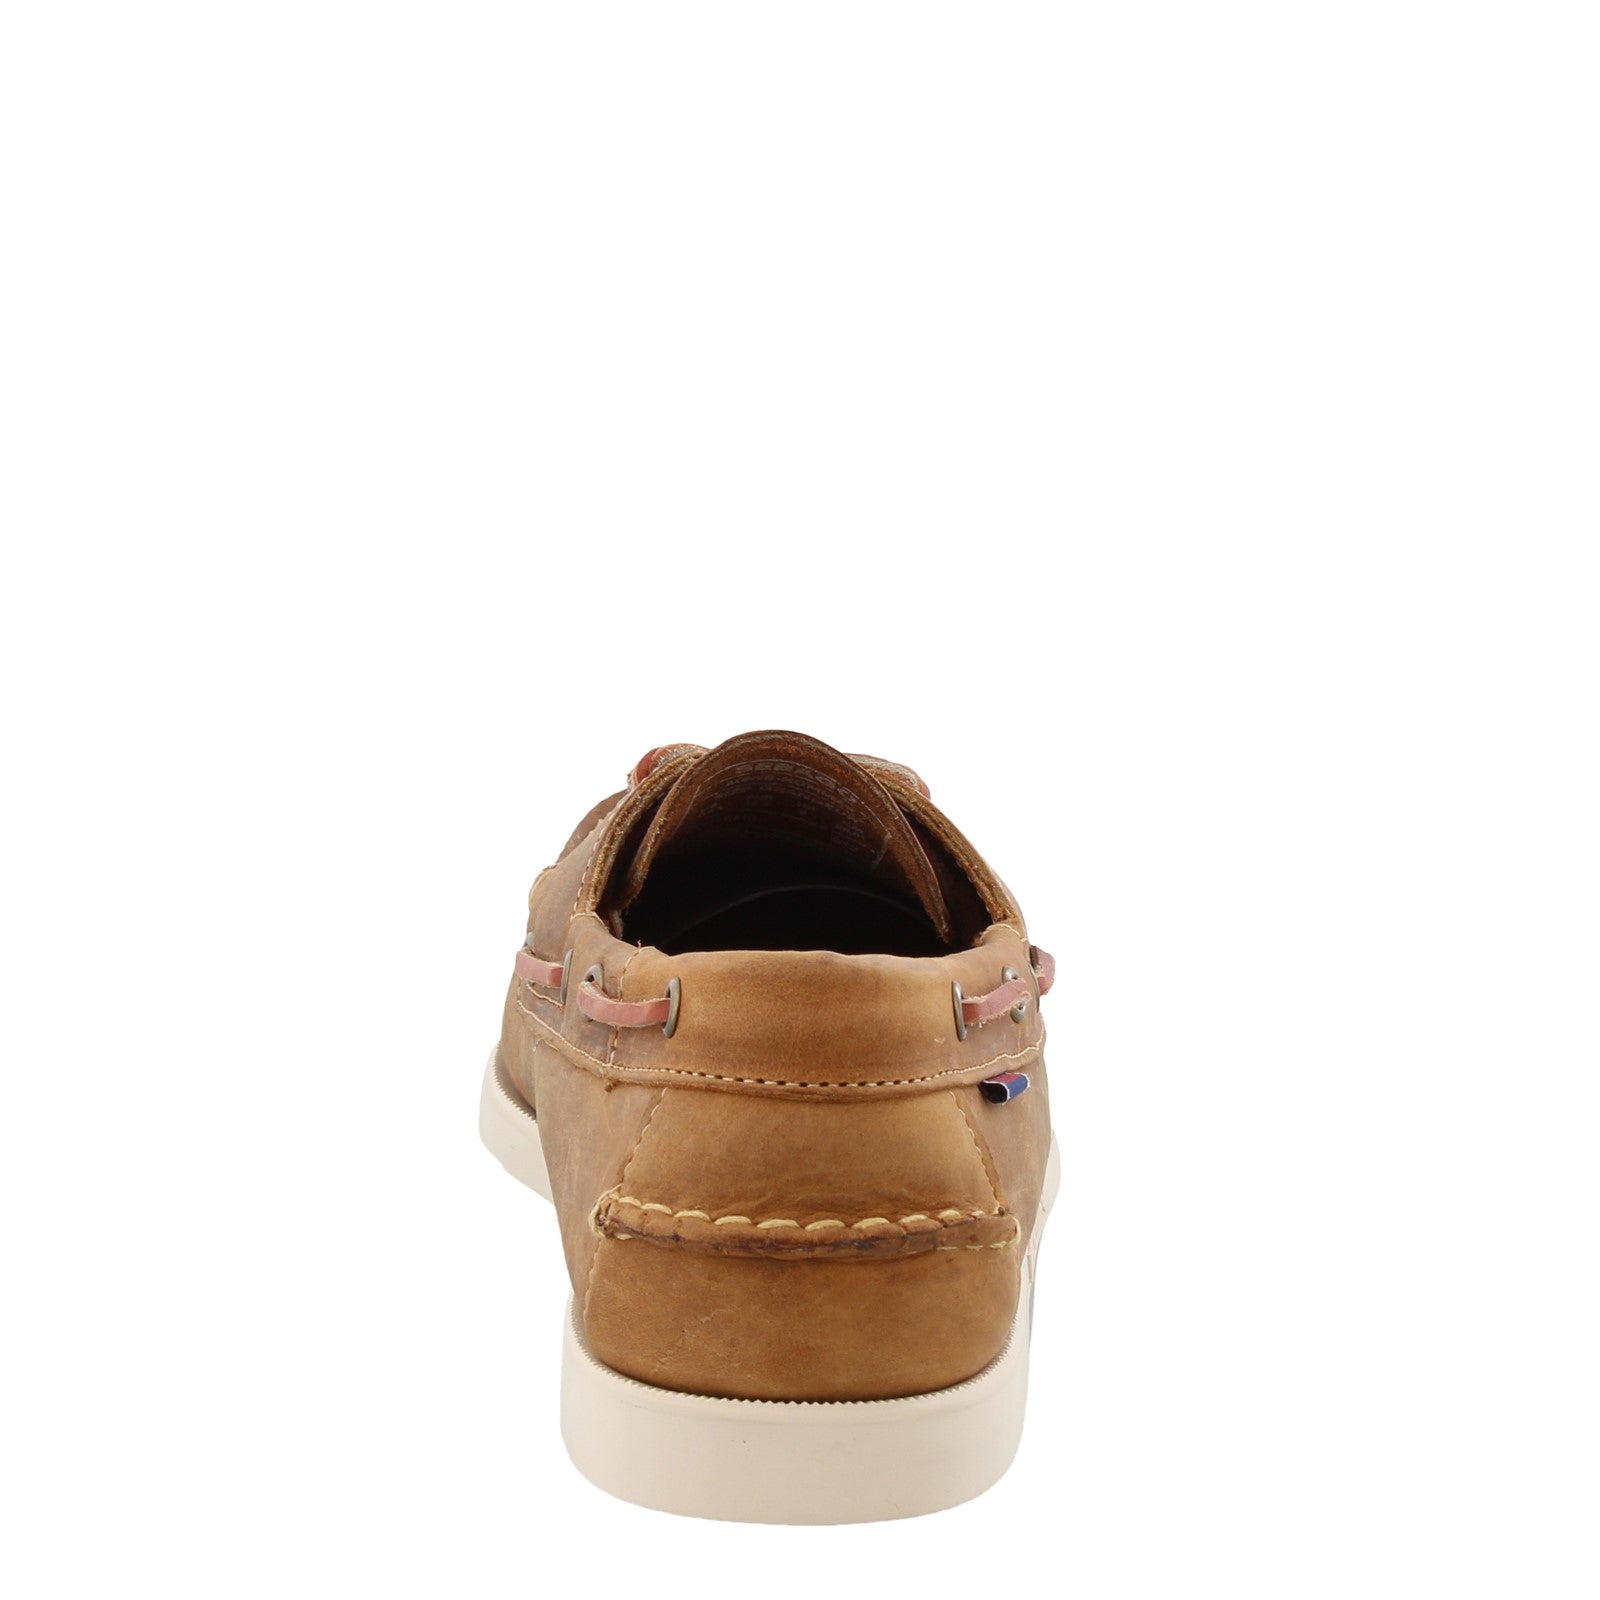 Sebago Portland boat shoes - Brown